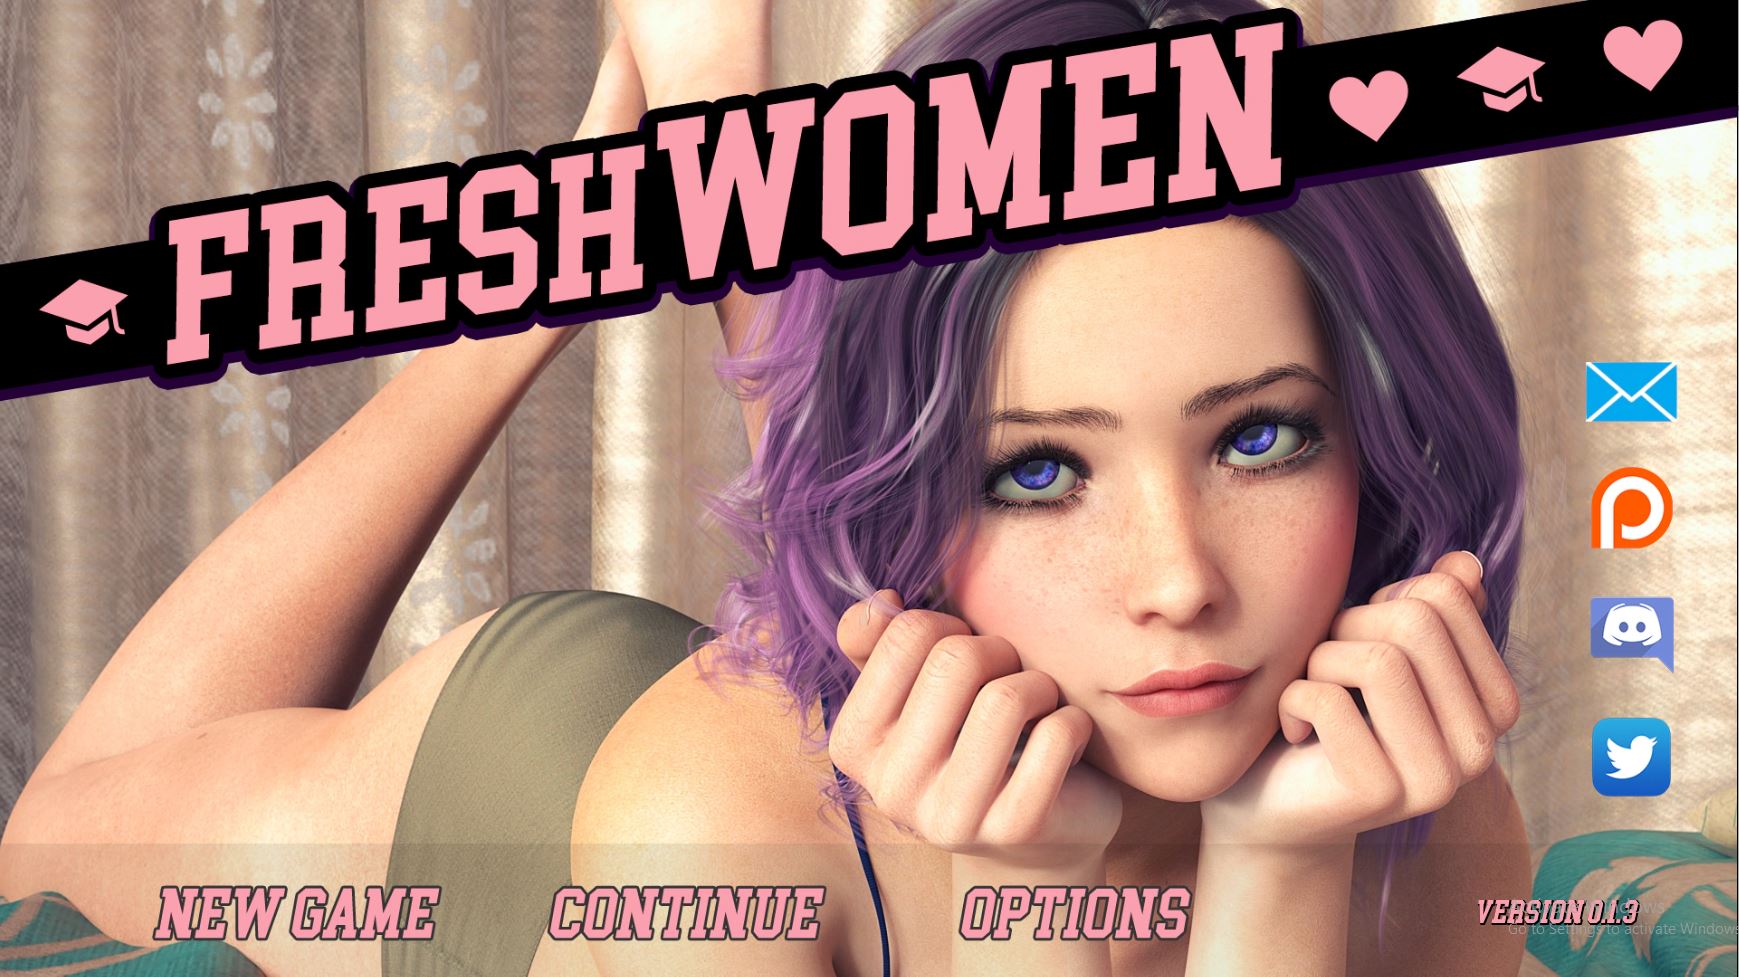 Freshwomen porn game